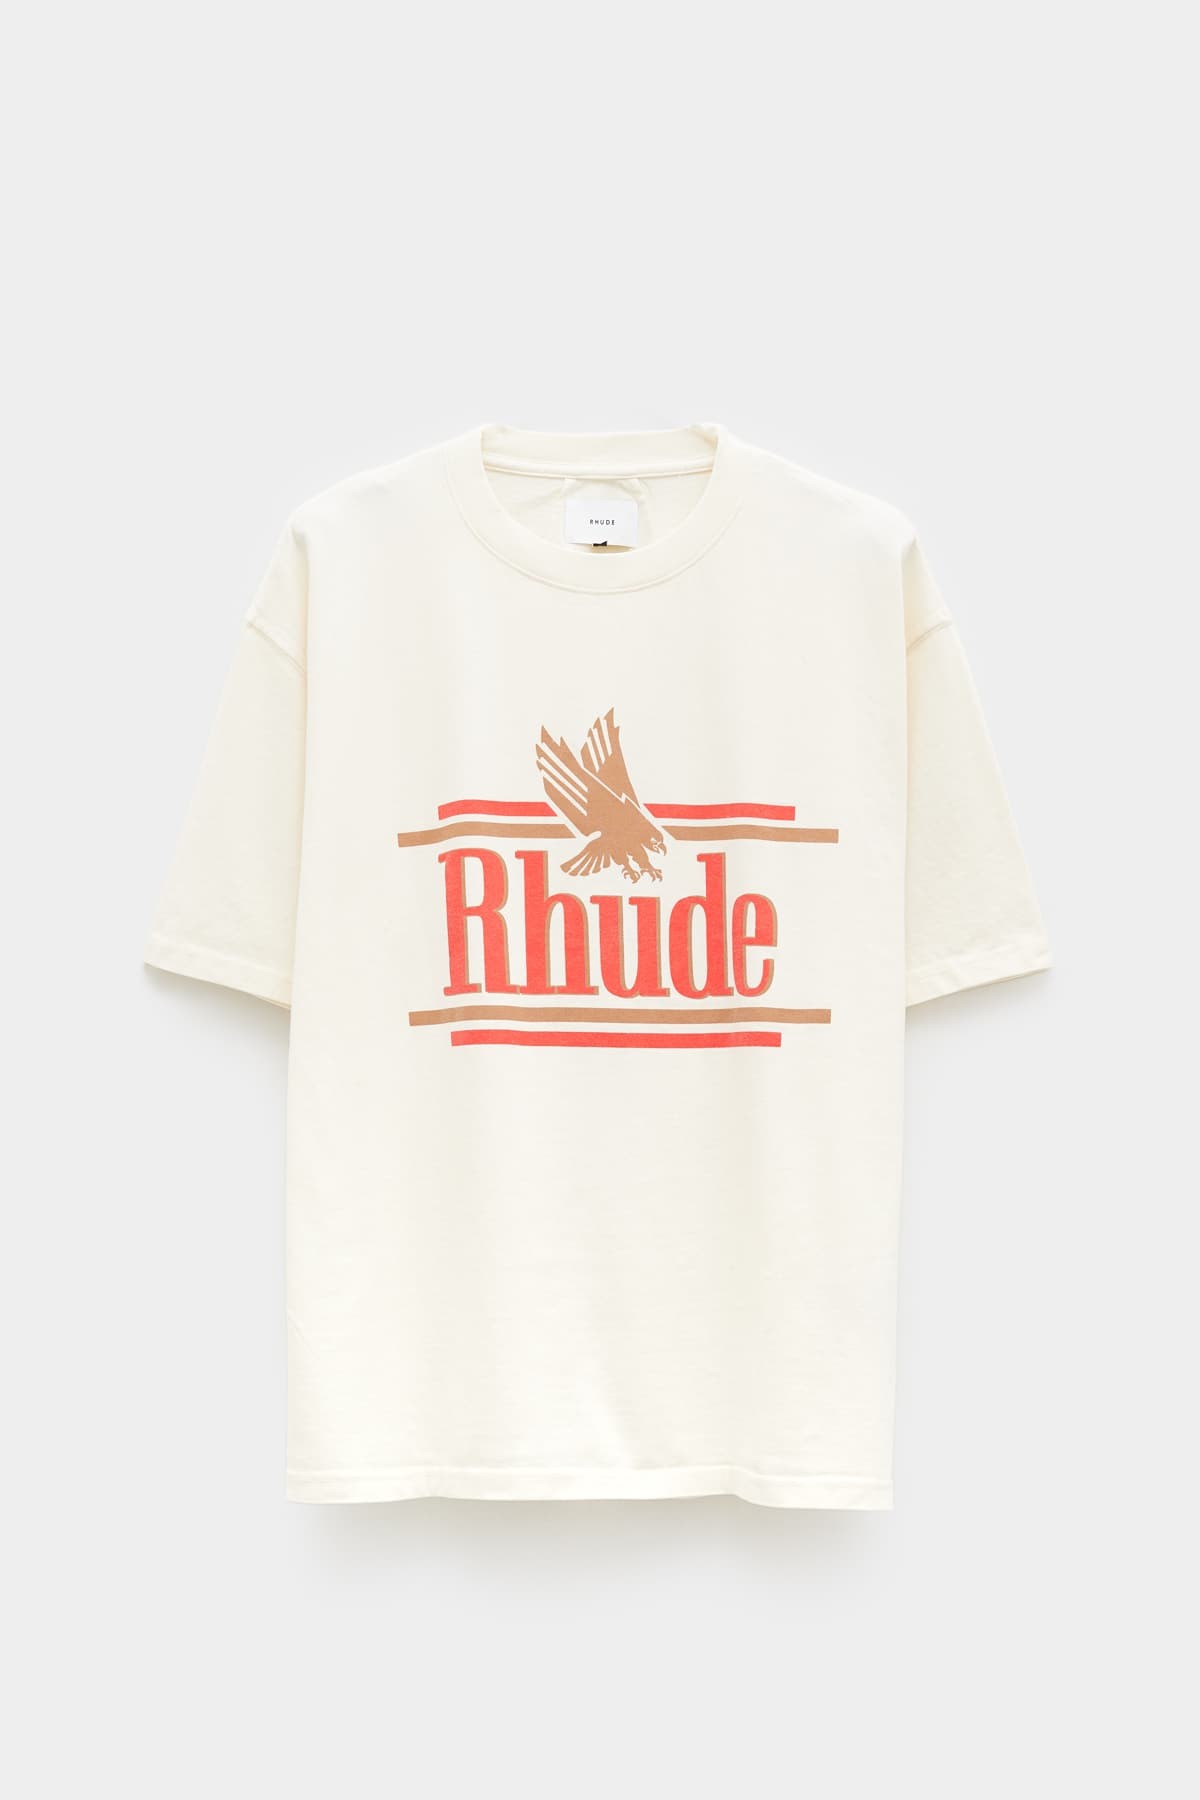 RHUDE VINTAGE WHITE ROSSA T-SHIRT IAMNUE